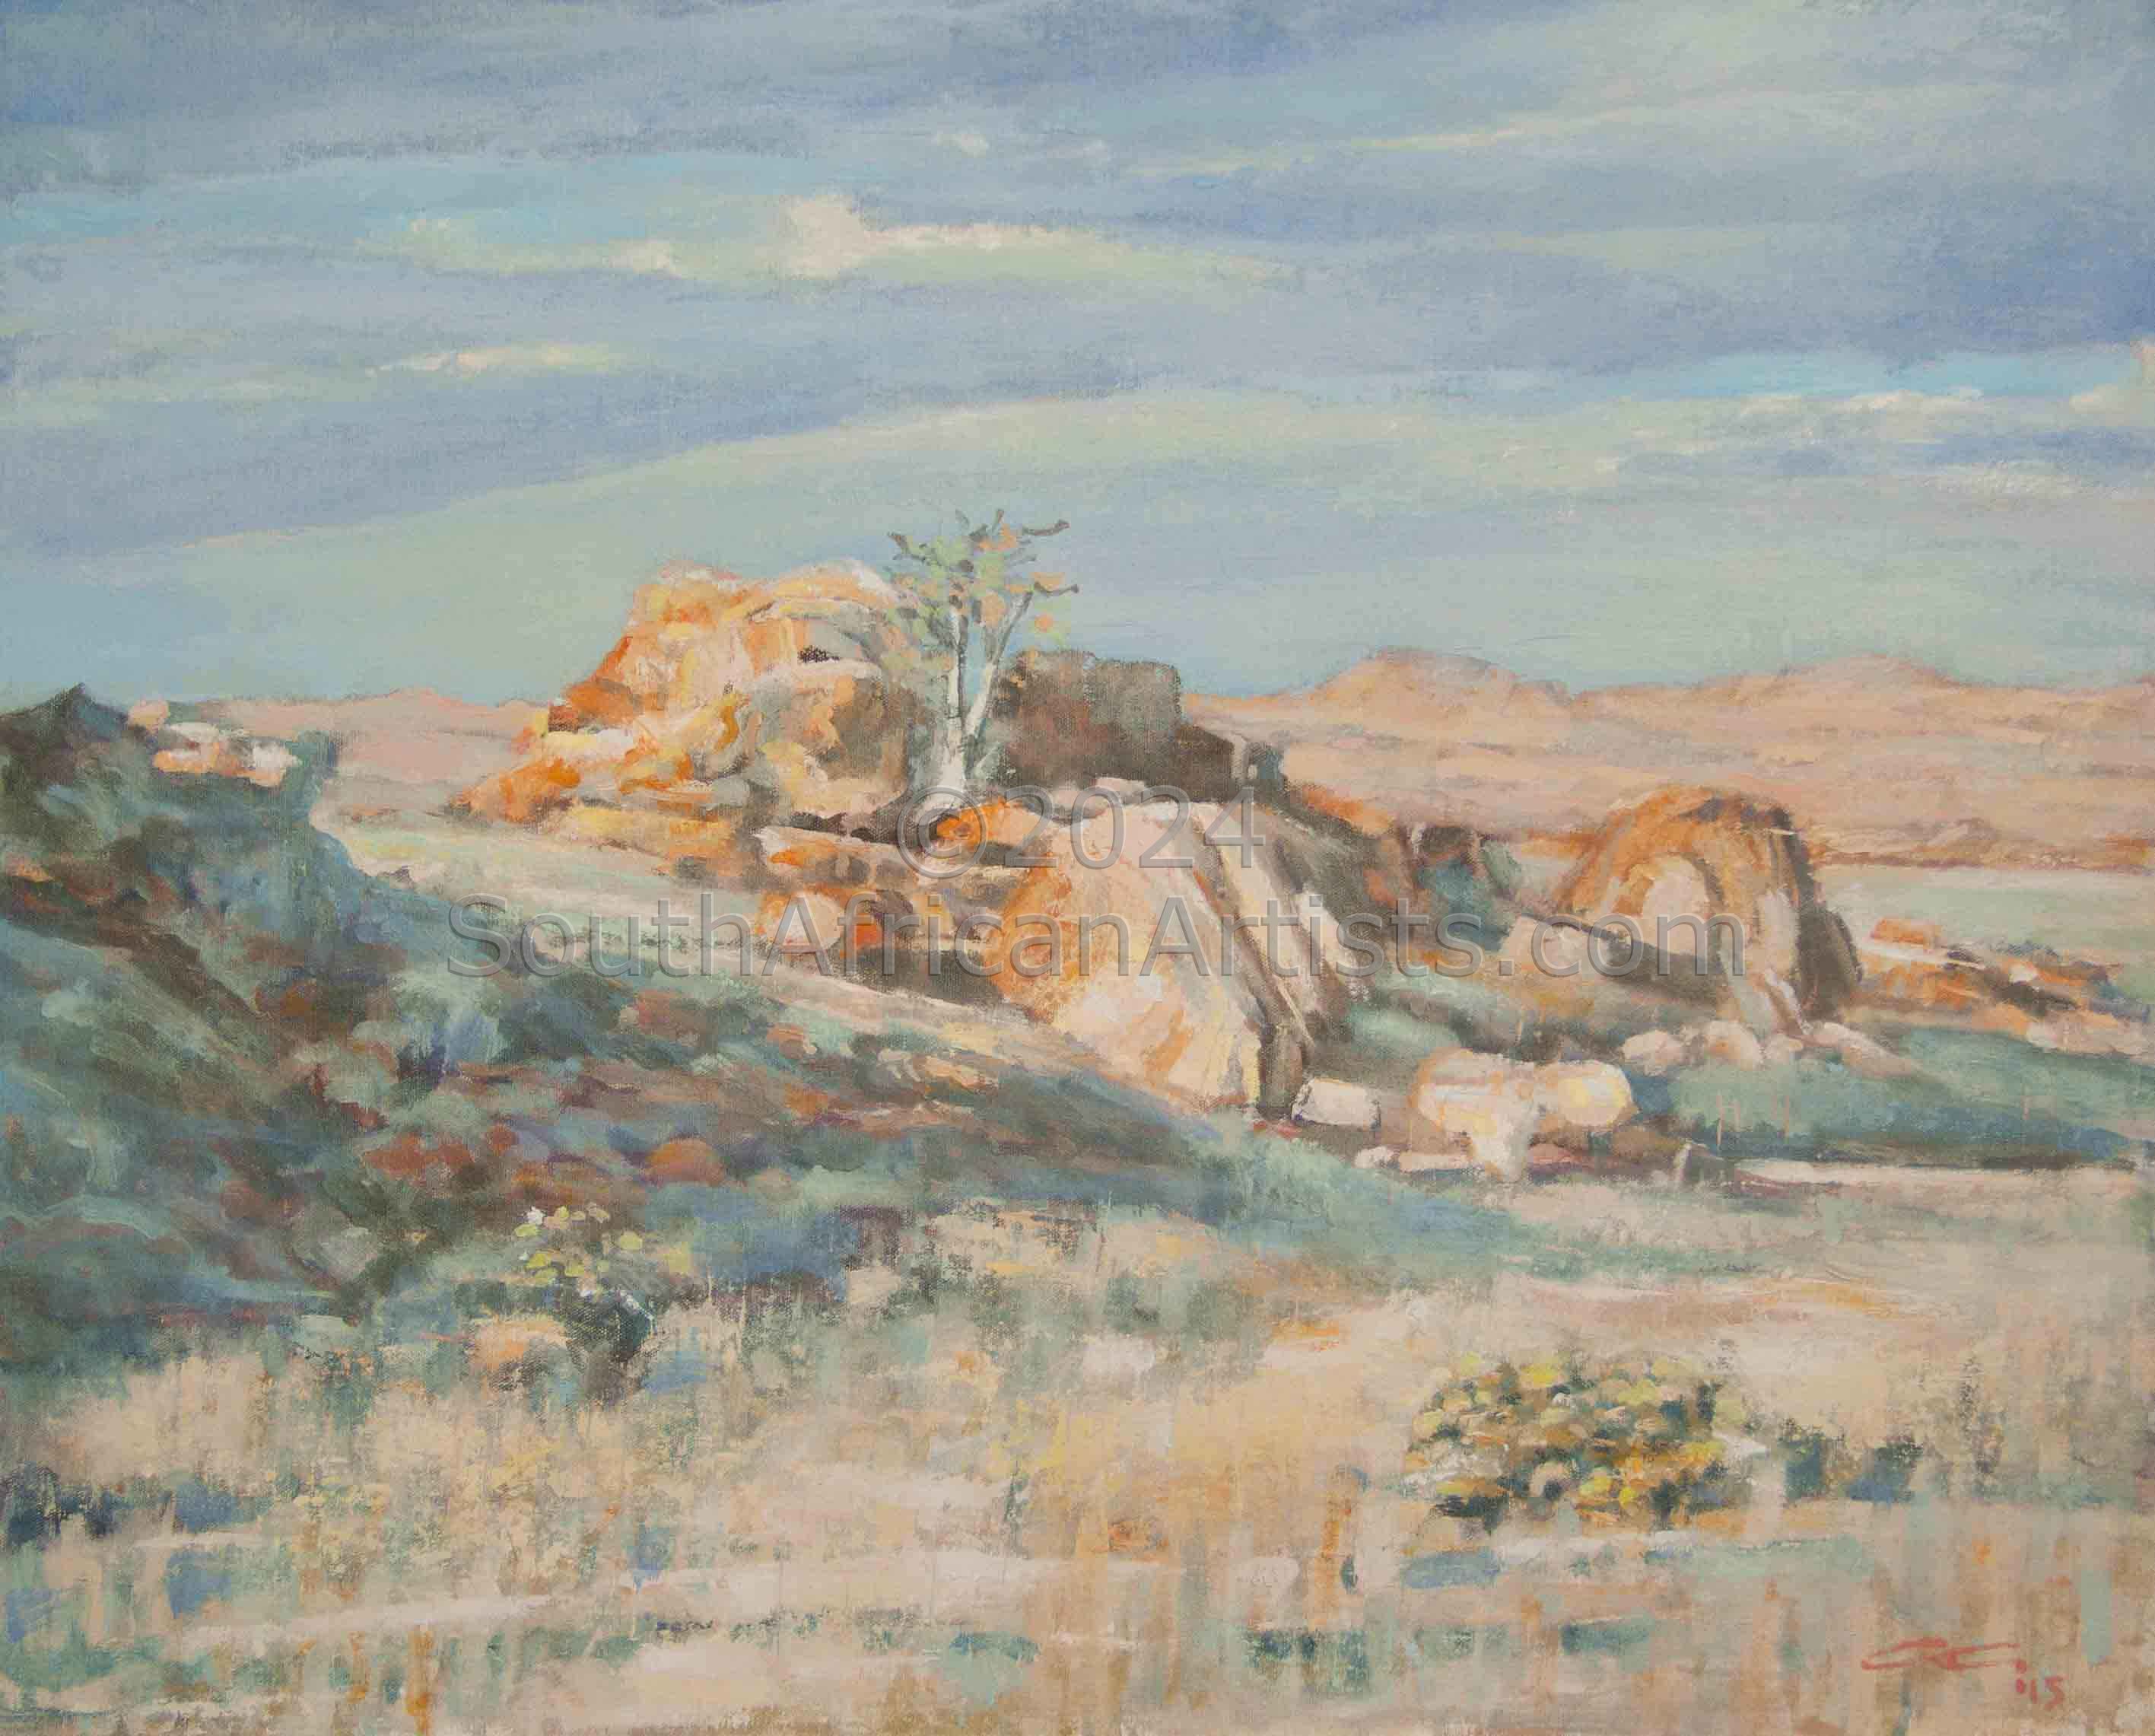 Early Light - Namib